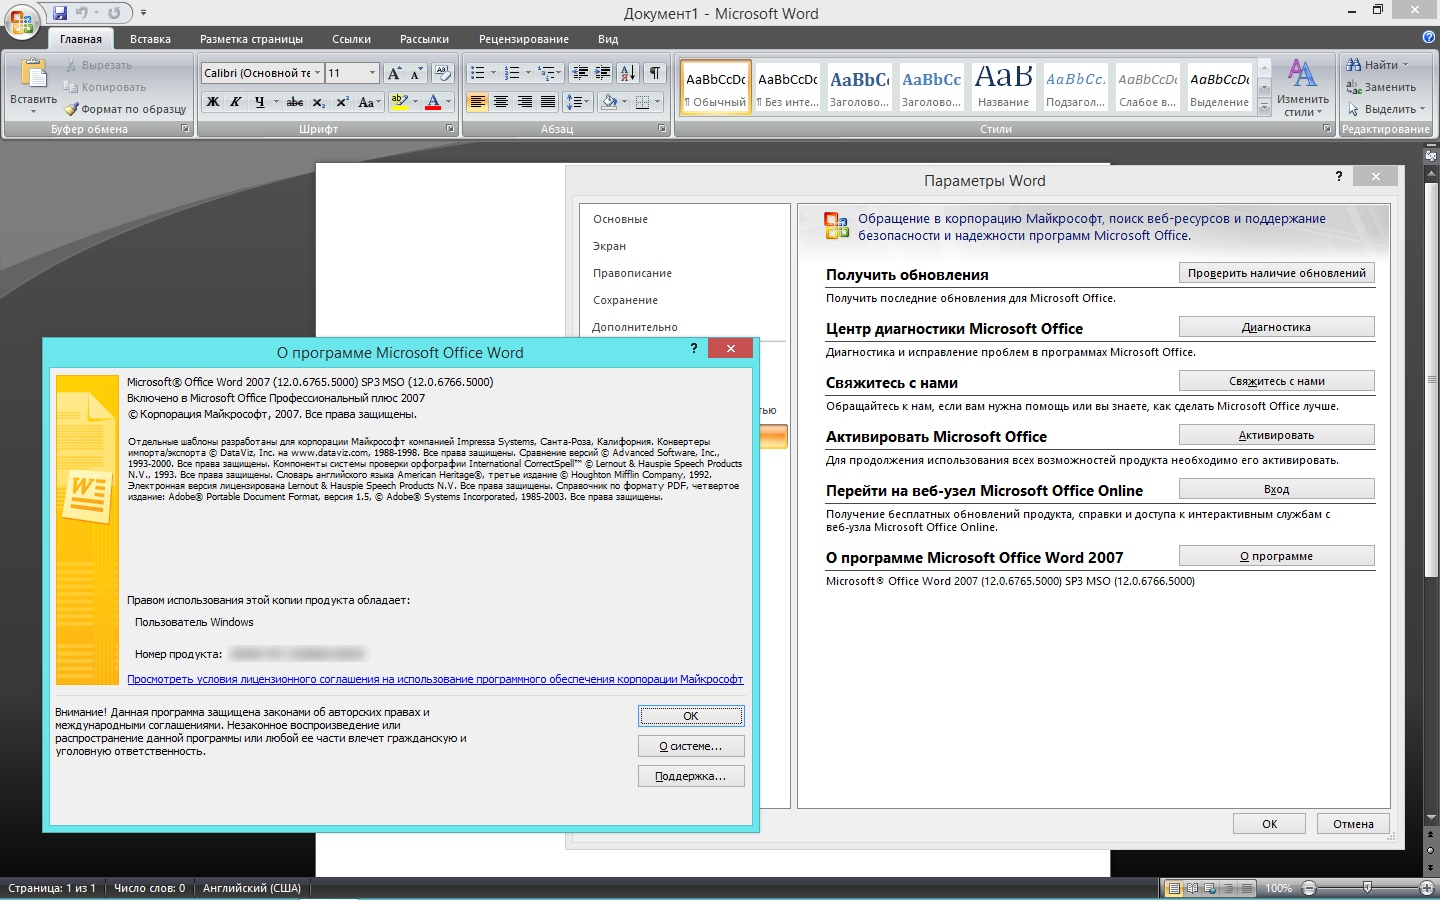 MS Office 2007 Pro Plus license info